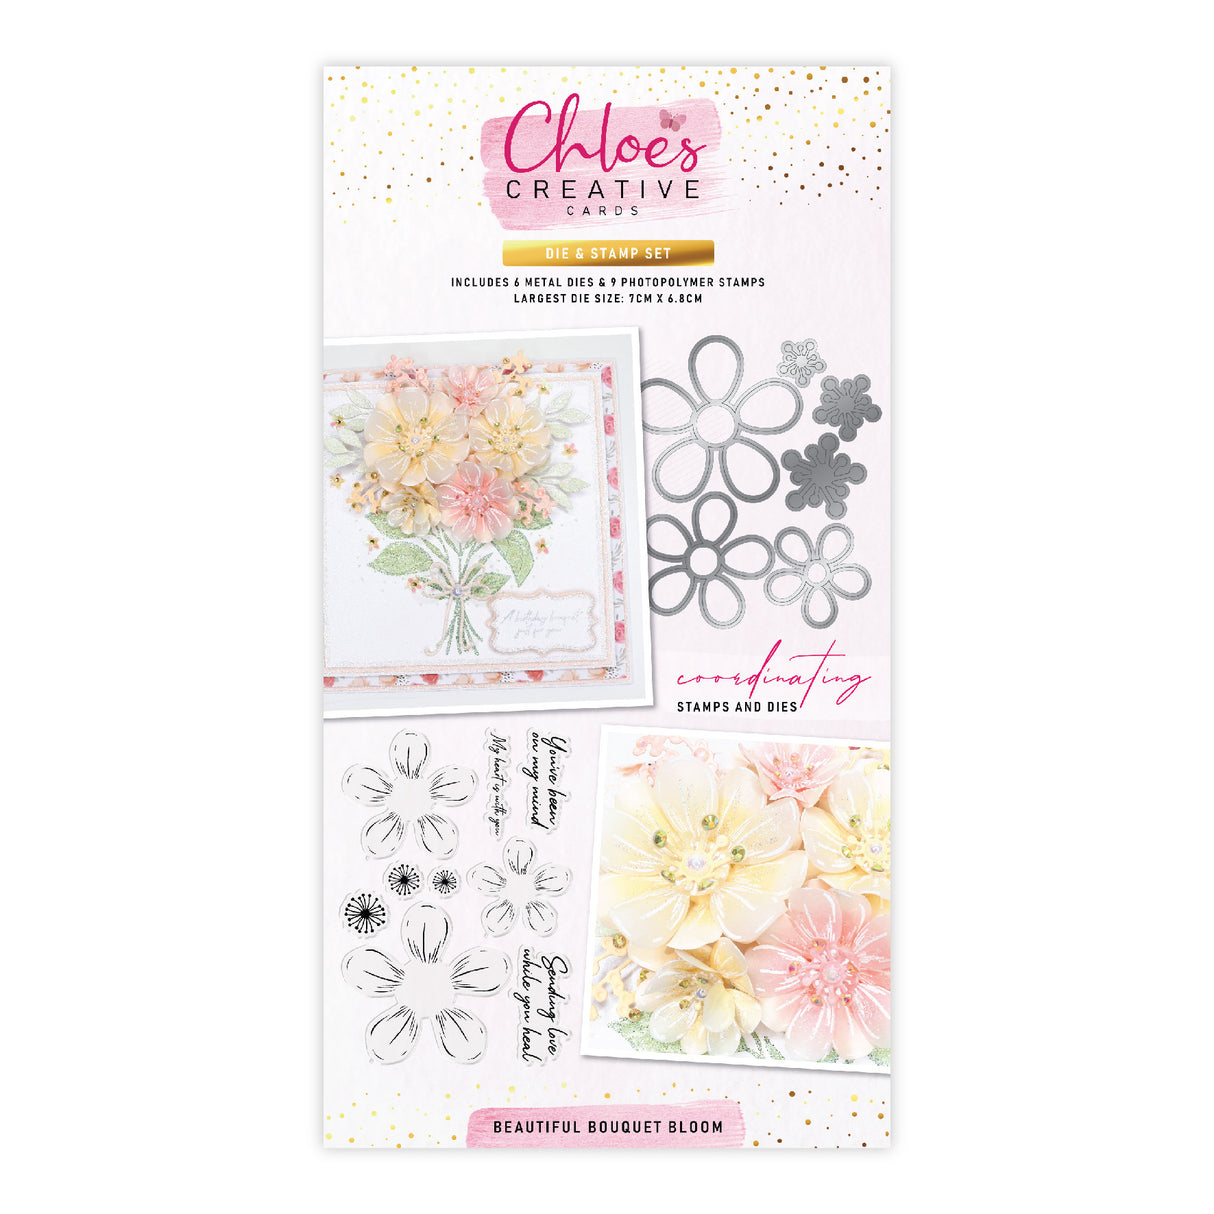 Chloes Creative Cards Die & Stamp Set - Beautiful Bouquet Bloom